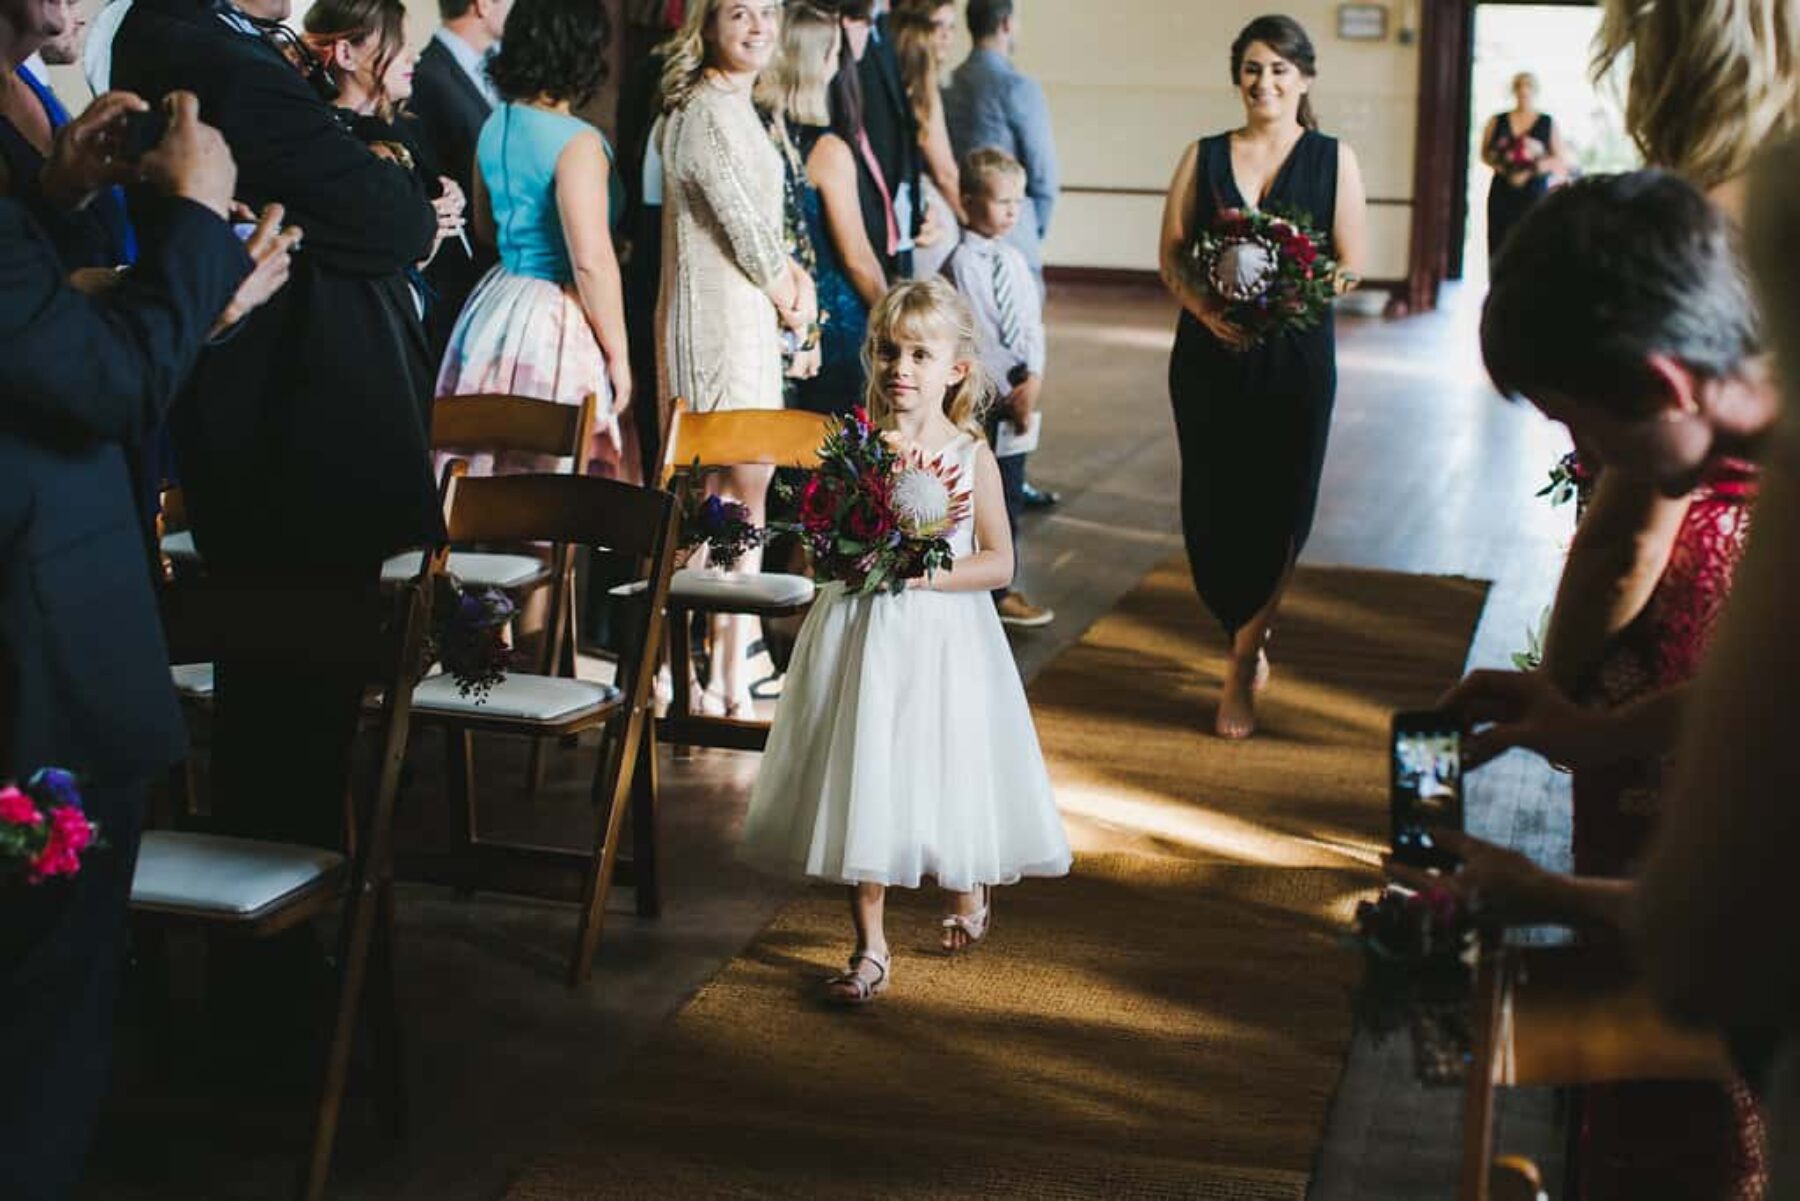 North Perth Town Hall wedding - photography by Amanda Alessi